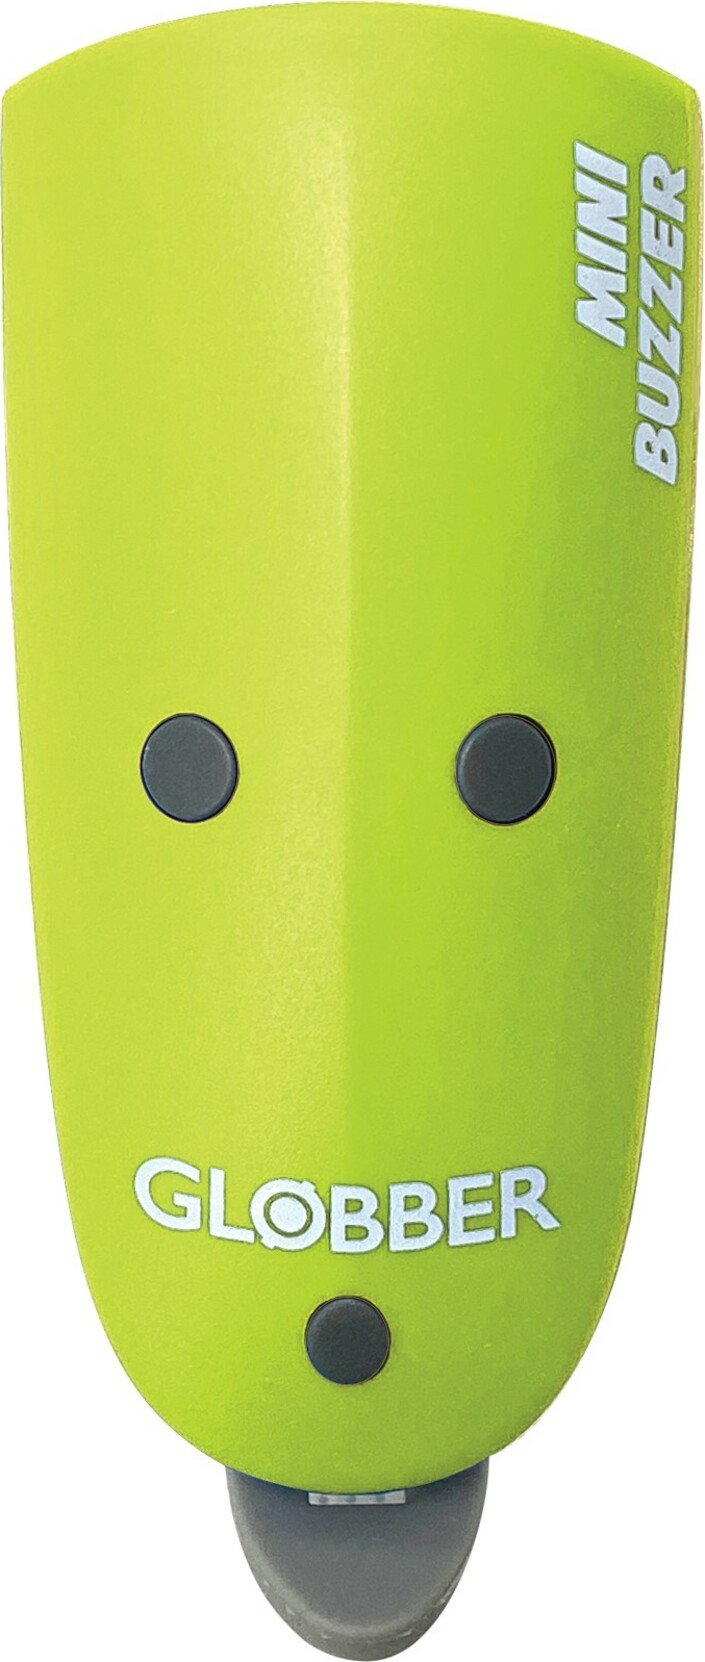 Globber Mini Buzzer Lime Green